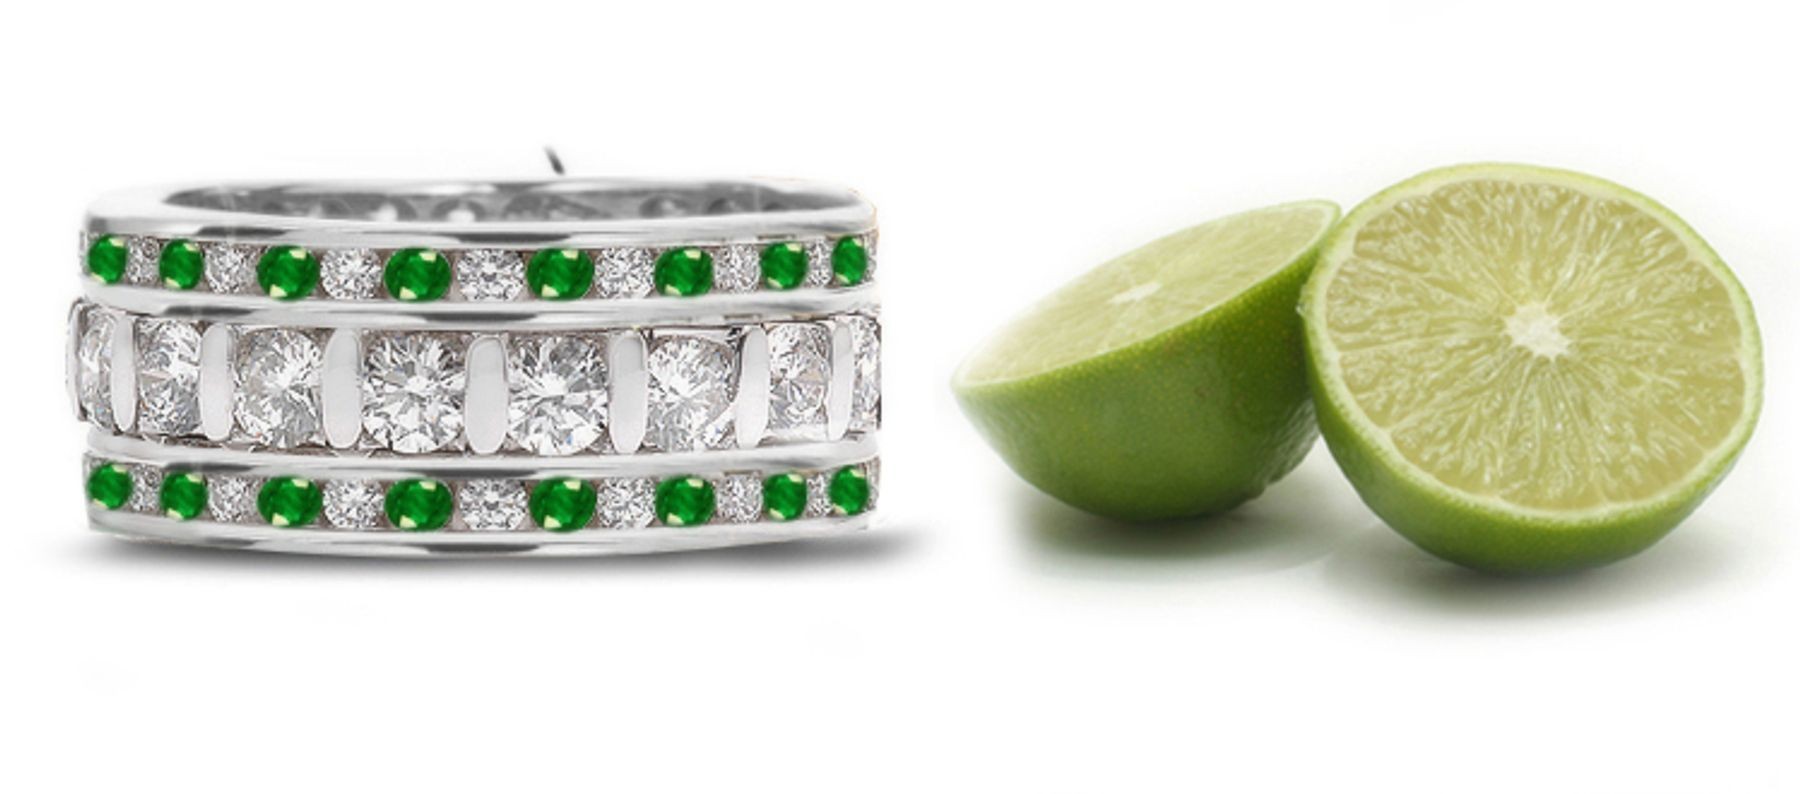 Masterpiece: New Product! Triple Bar Set Emerald & Diamond Eternity Ring with Diamond & Emerald Borders in Gold